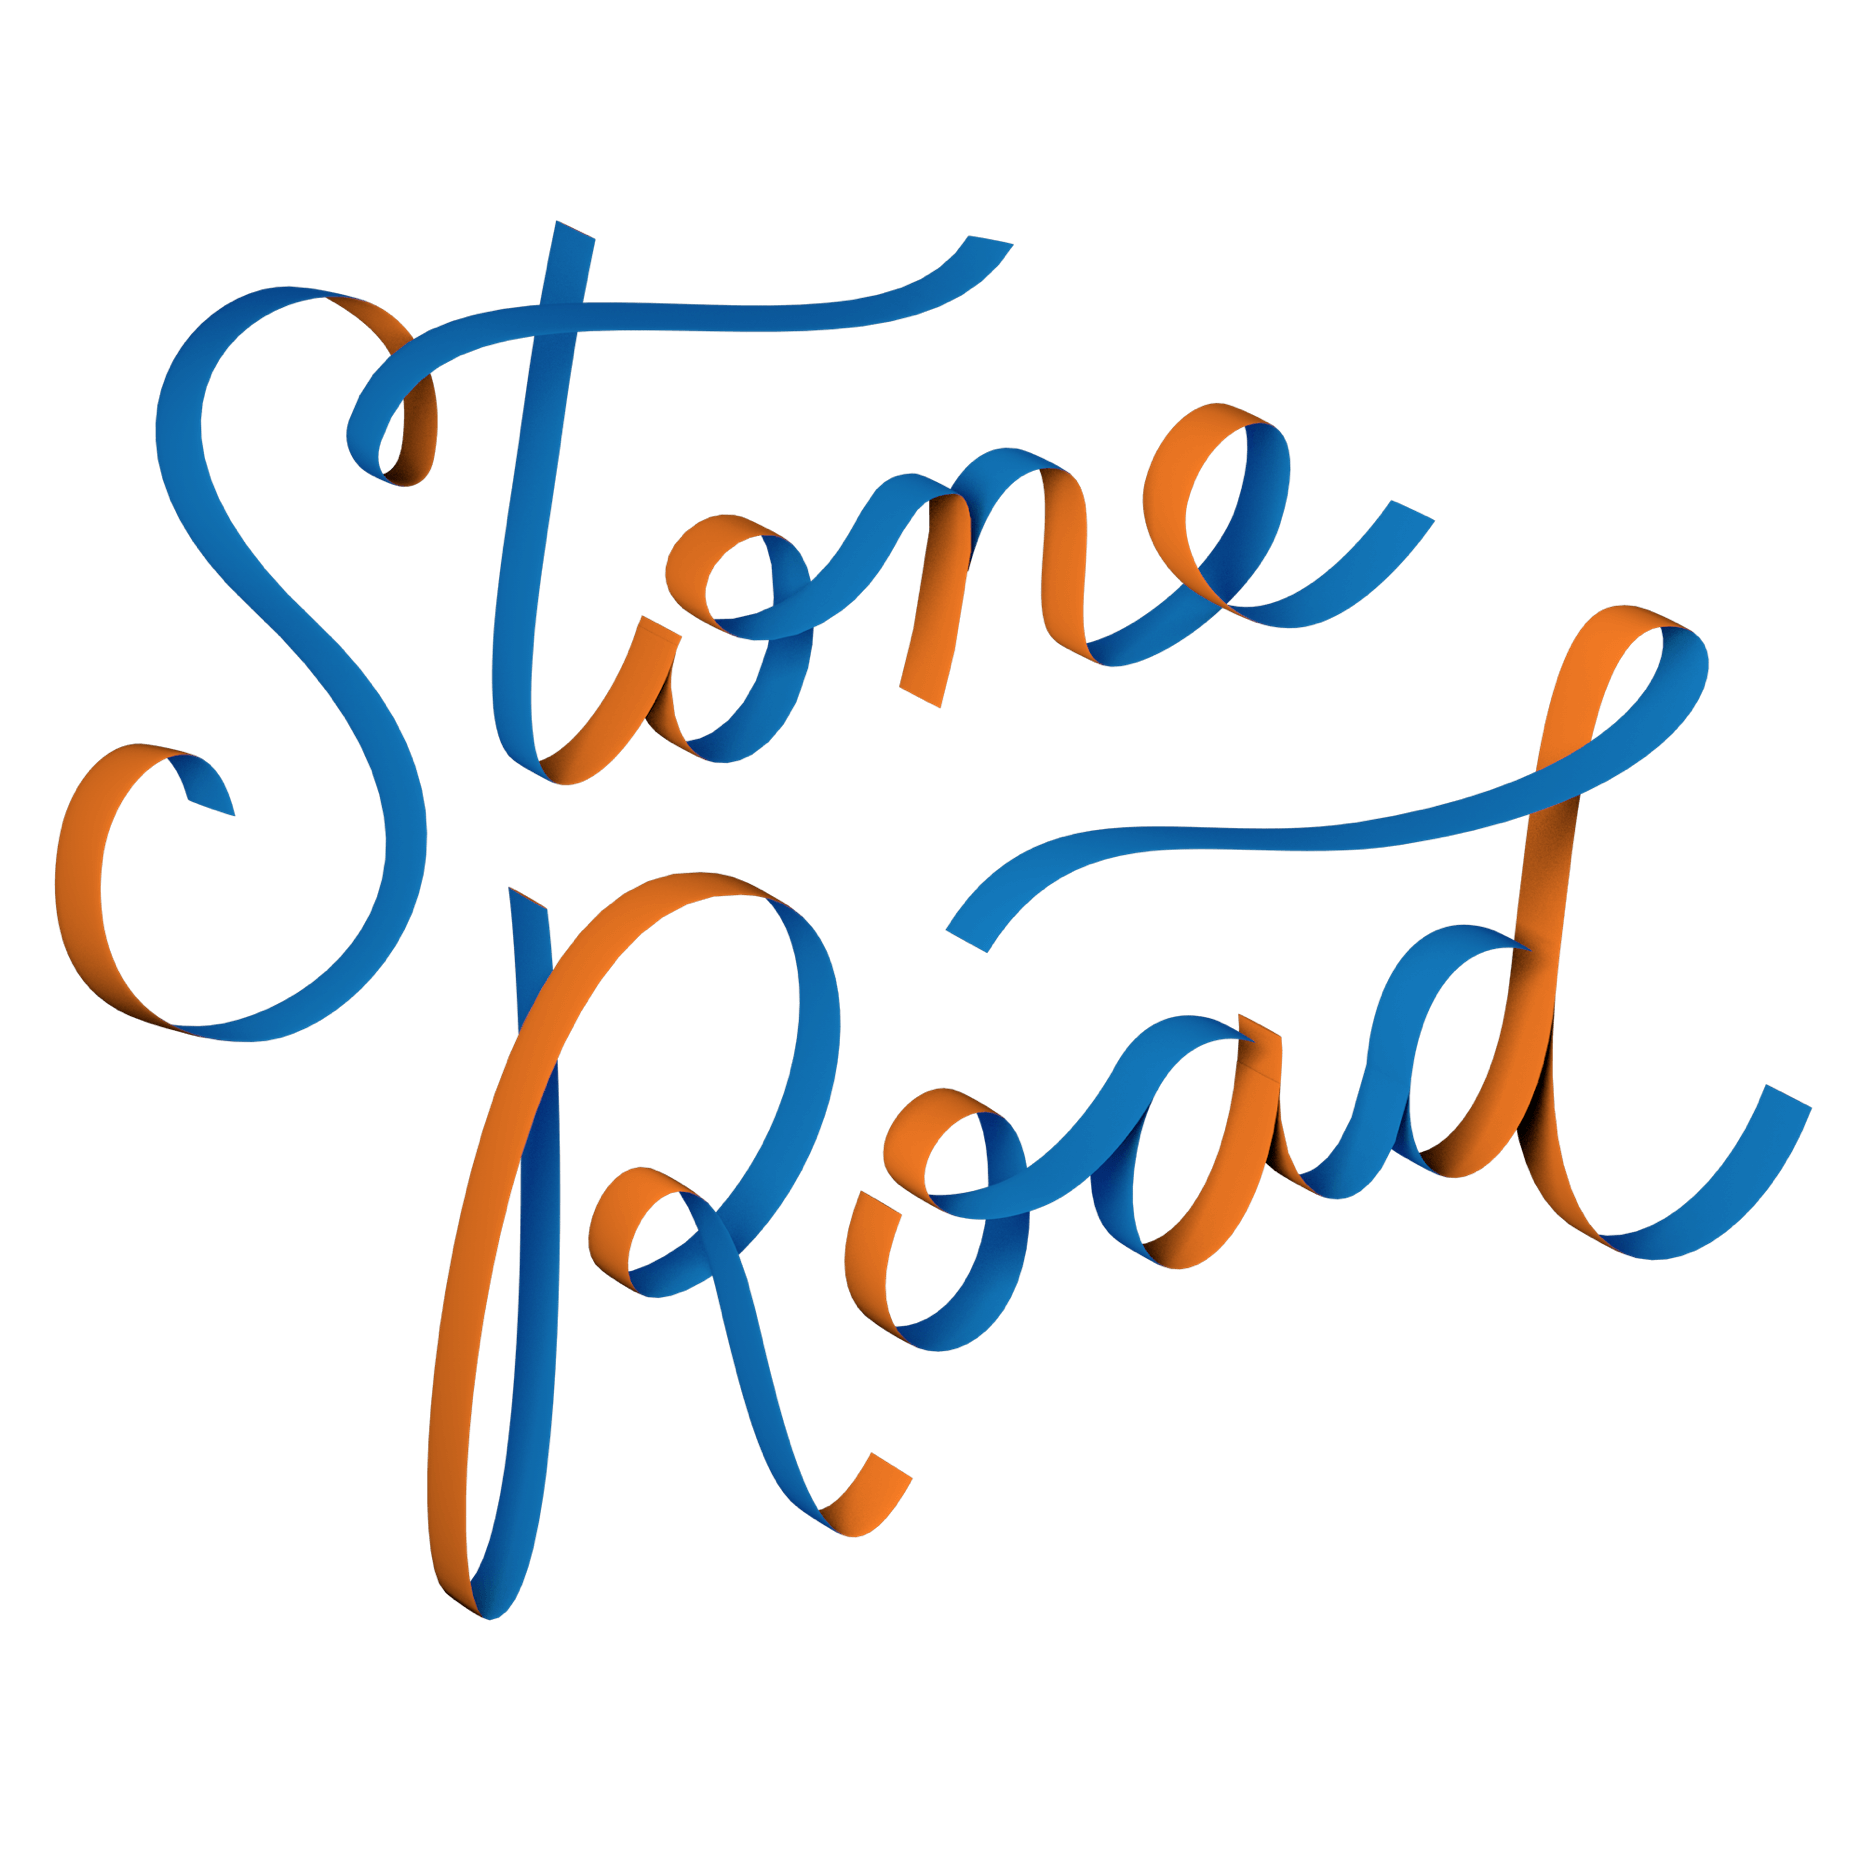 Stone Road Logo